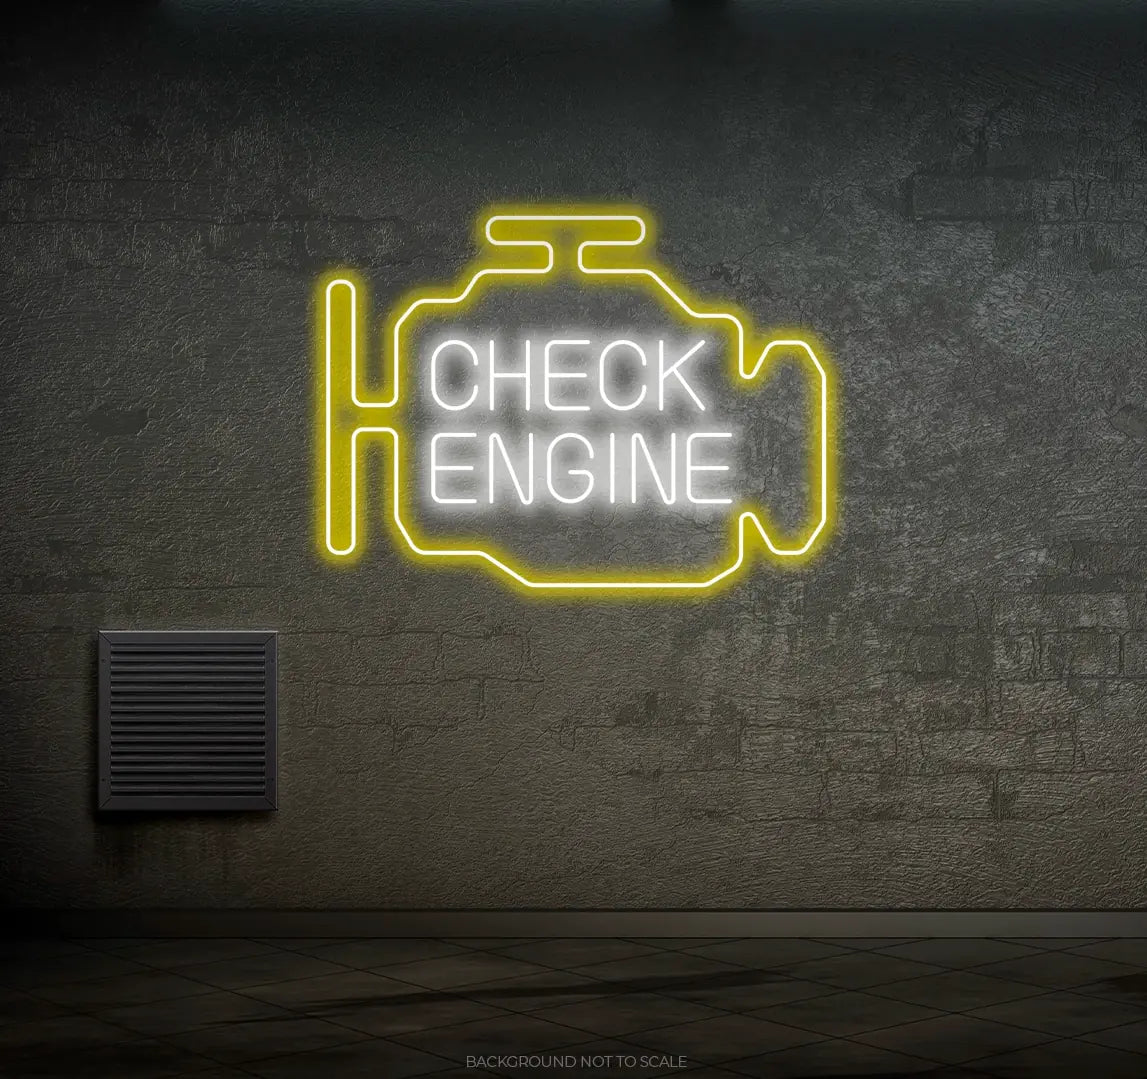 Check engine LED neon